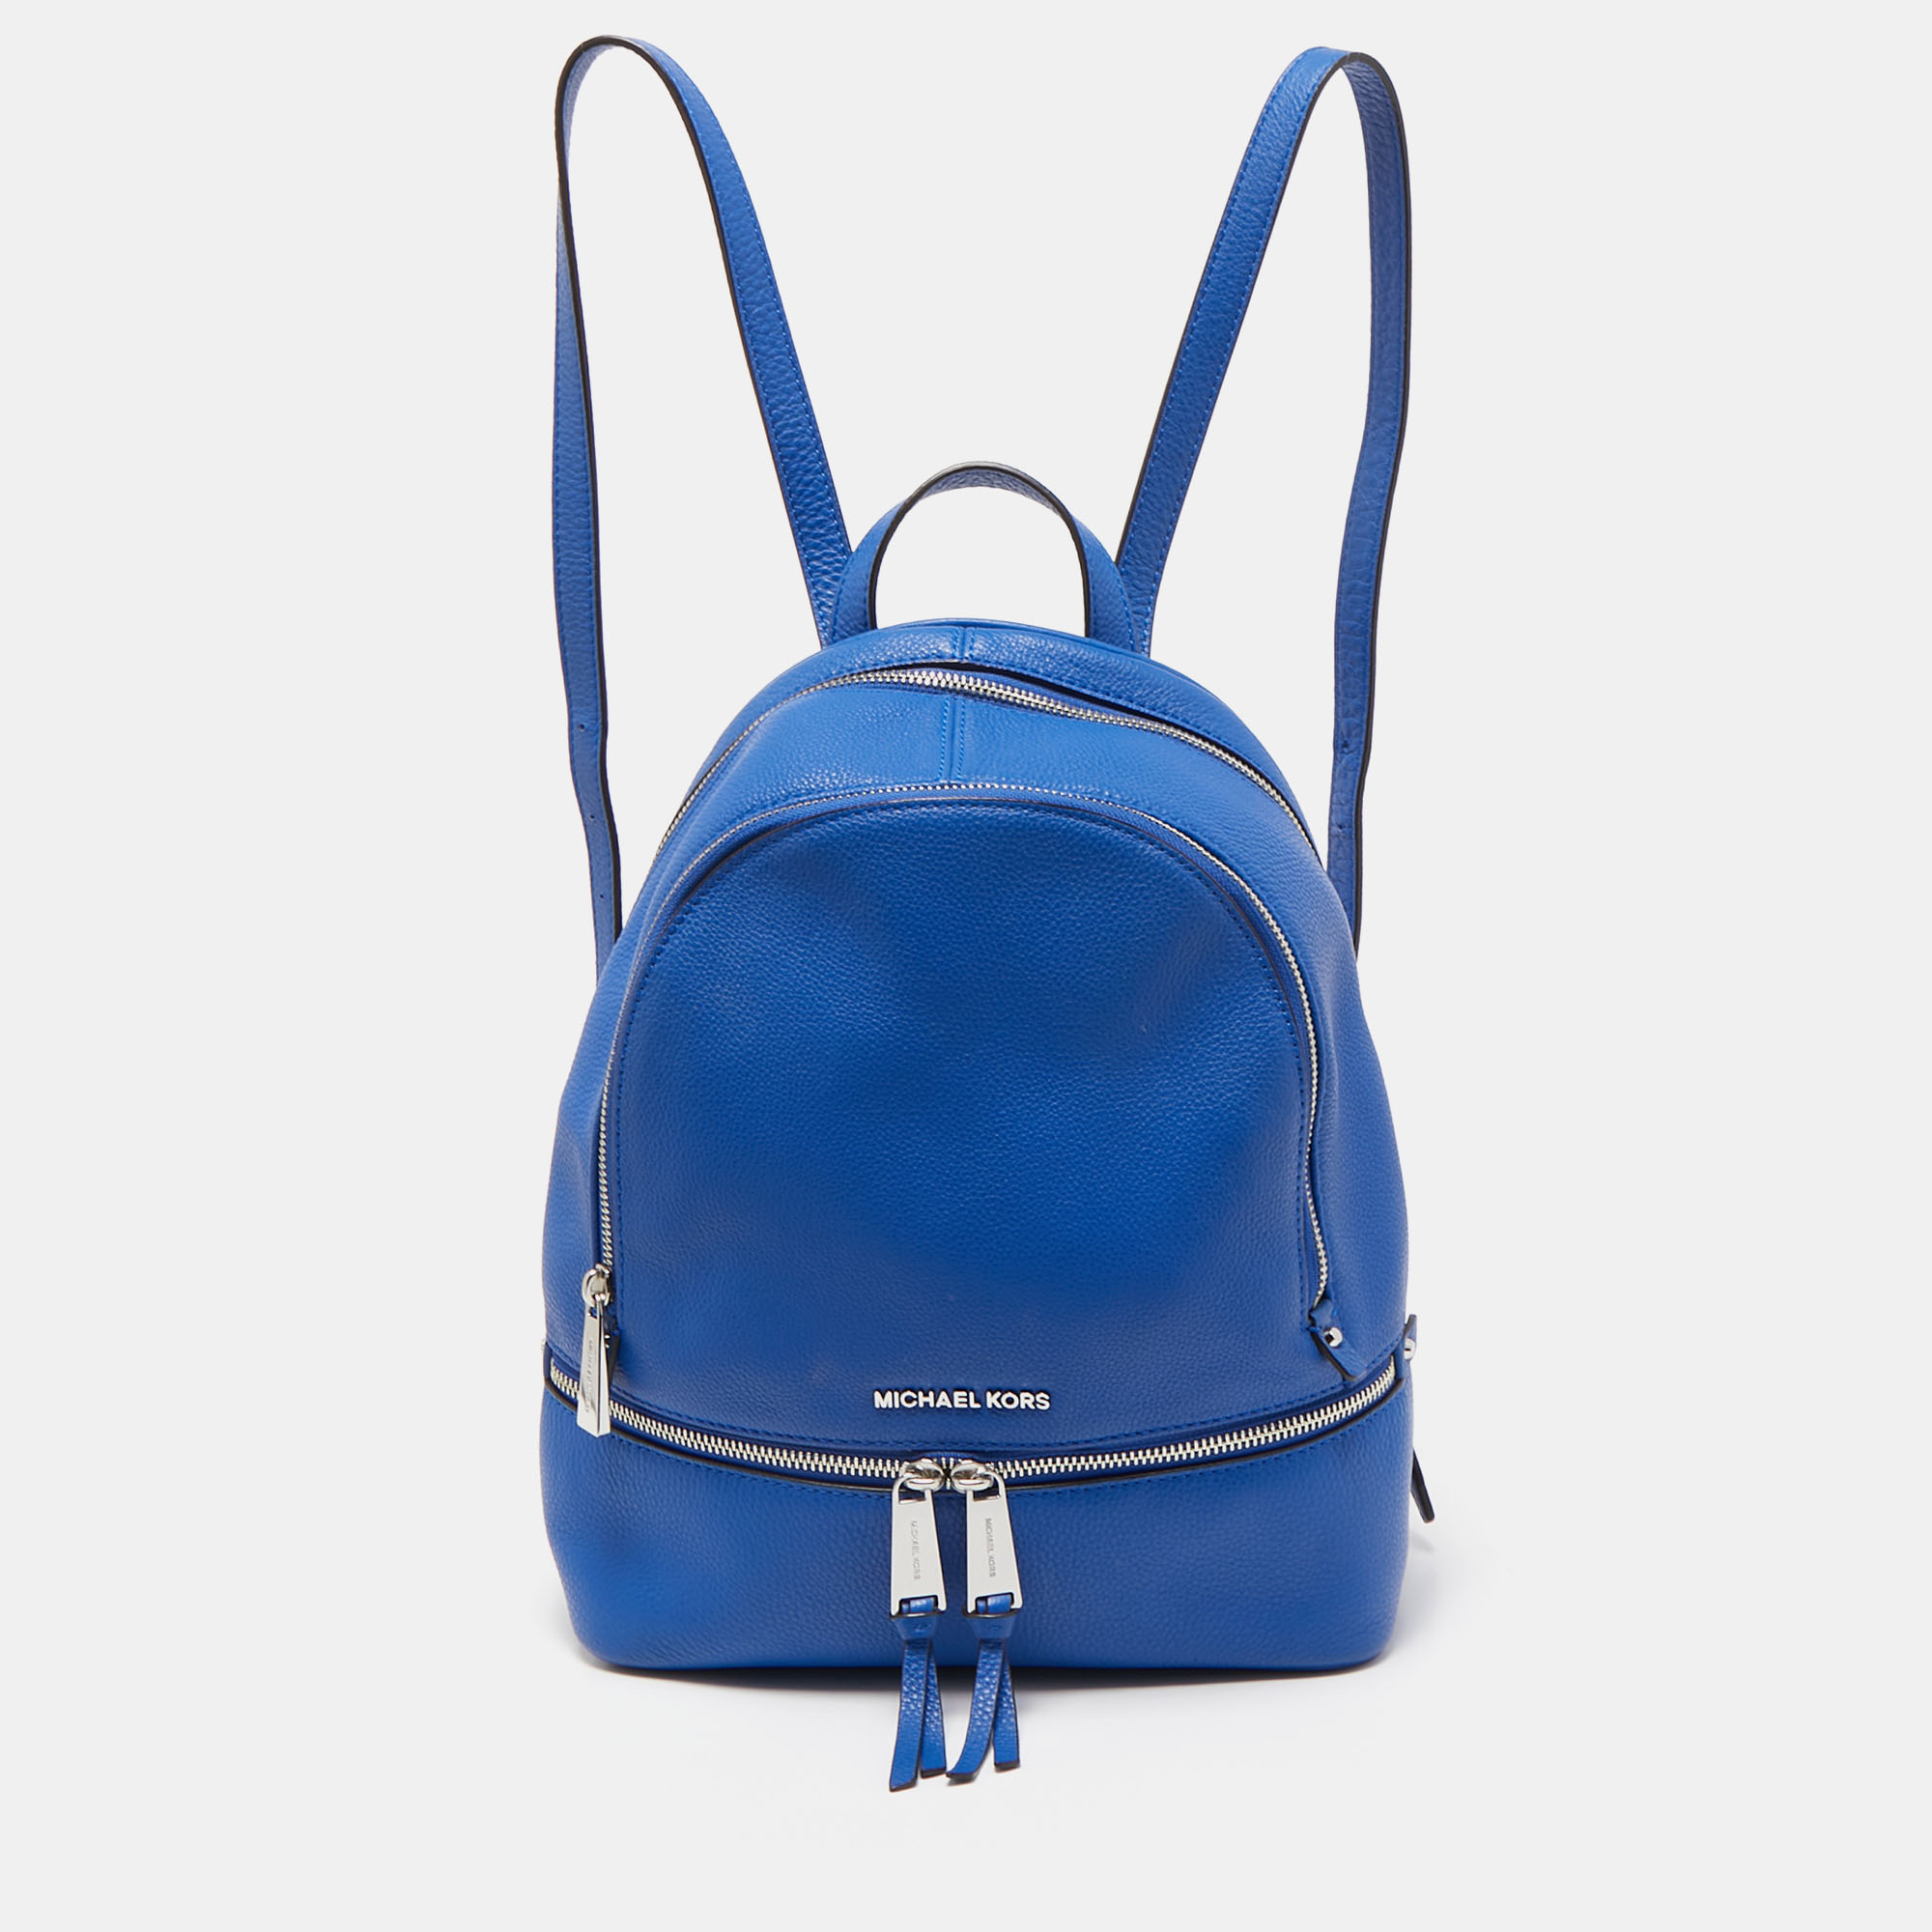 Michael Kors Blue Leather Rhea Backpack